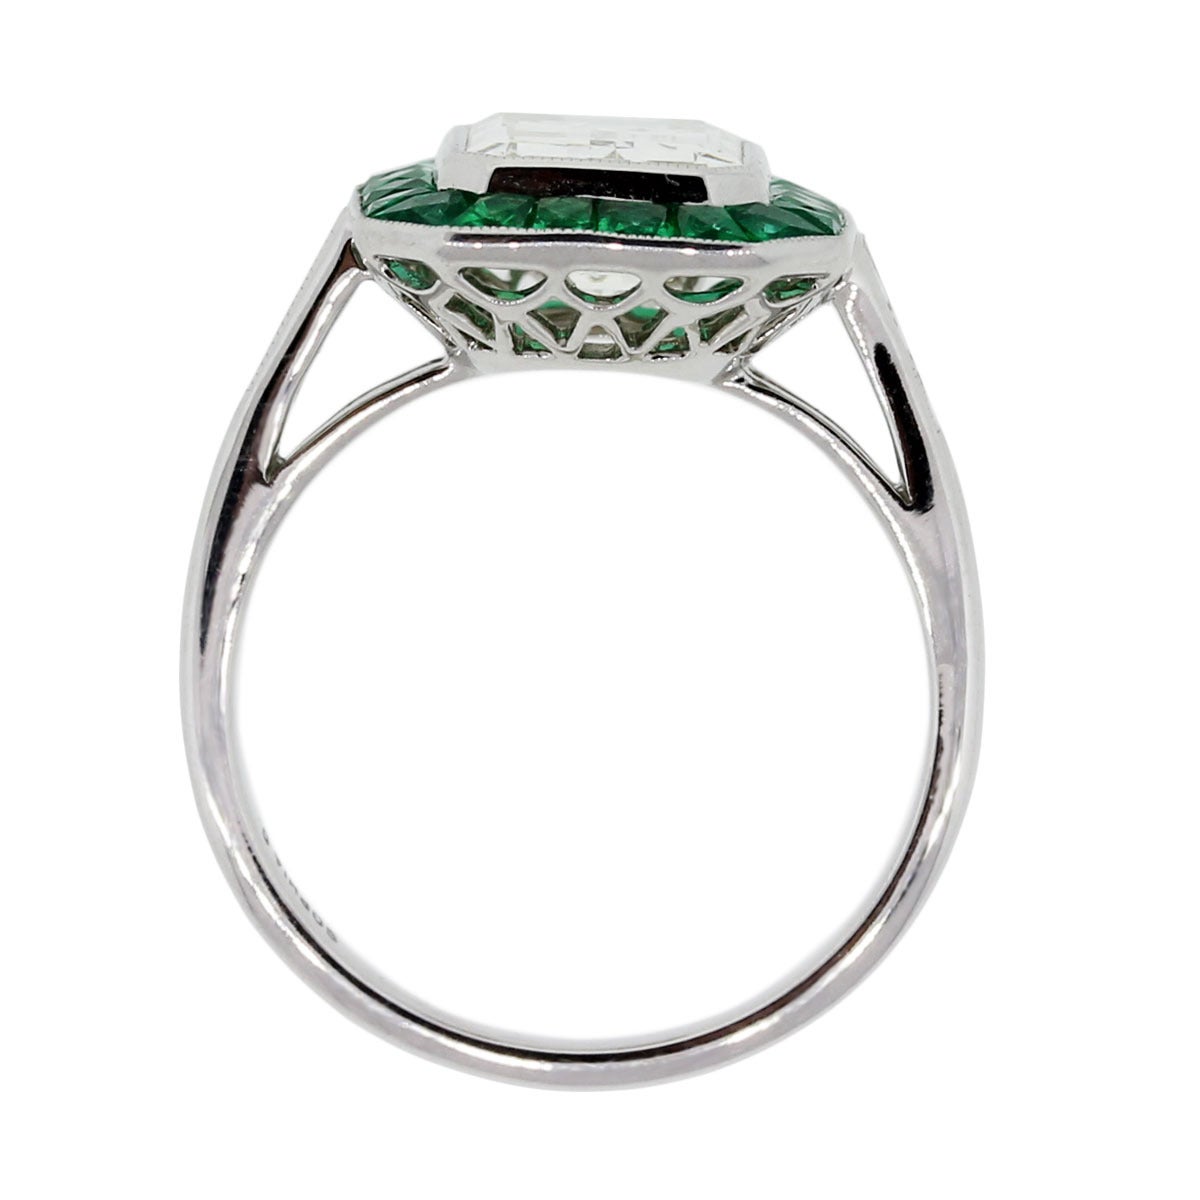 Style: Platinum 2.51ct Emerald Cut Diamond Emerald Halo Ring
Material: Platinum
Center Diamond Details: 2.51ct Emerald Cut Diamond. K in color and VS2 in clarity
Mounting Diamond Details: Approximately 0.14ctw of Asscher cut diamonds. G in color